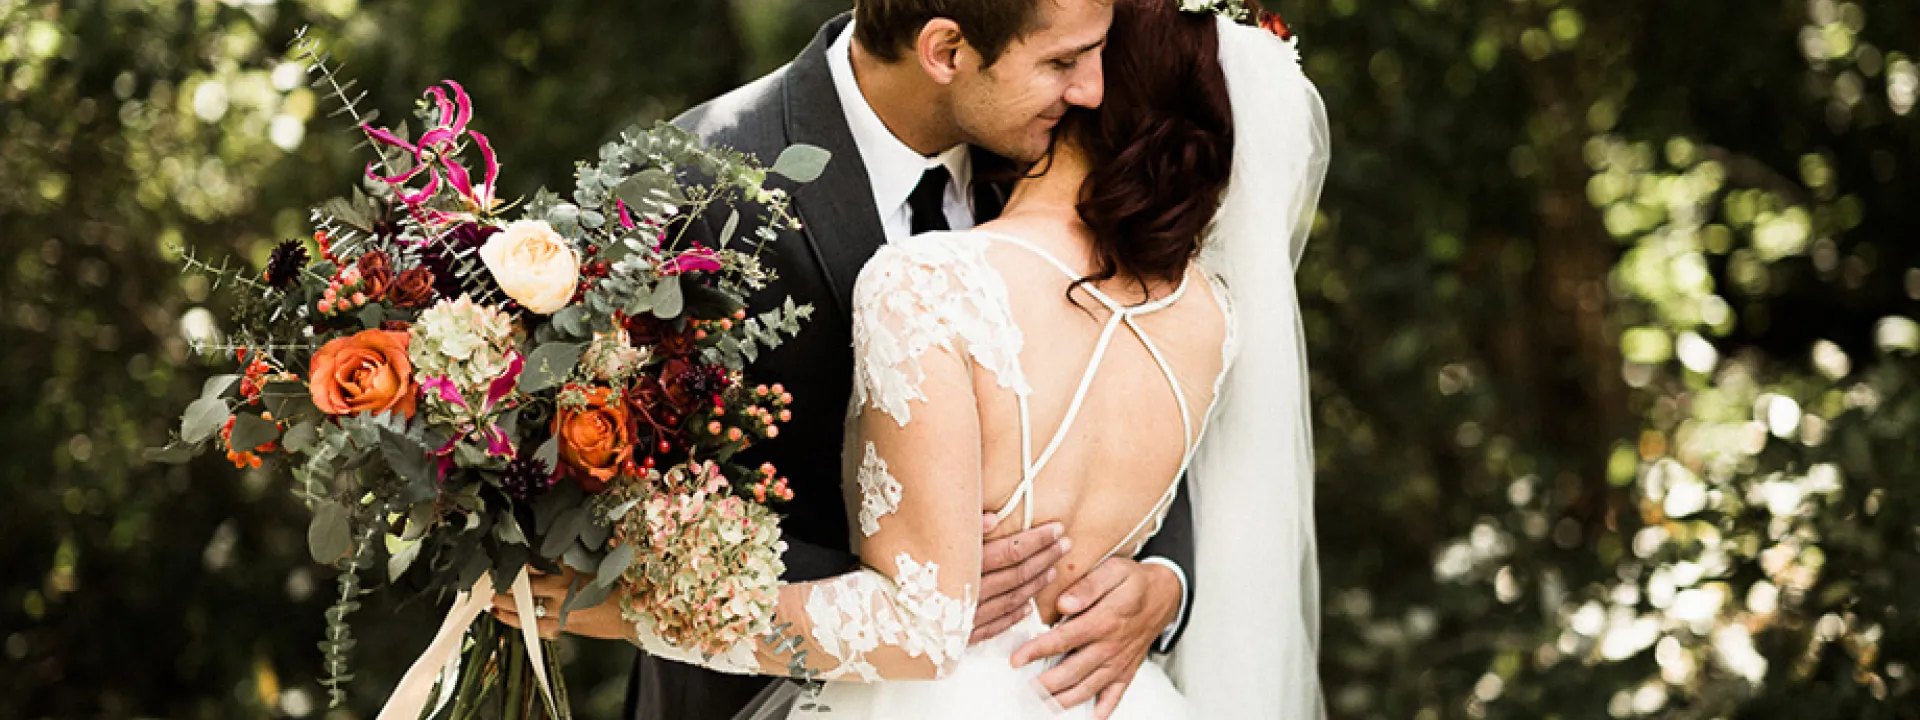 The Best Orange and Yellow Wedding Bouquets | Minnesota Bride